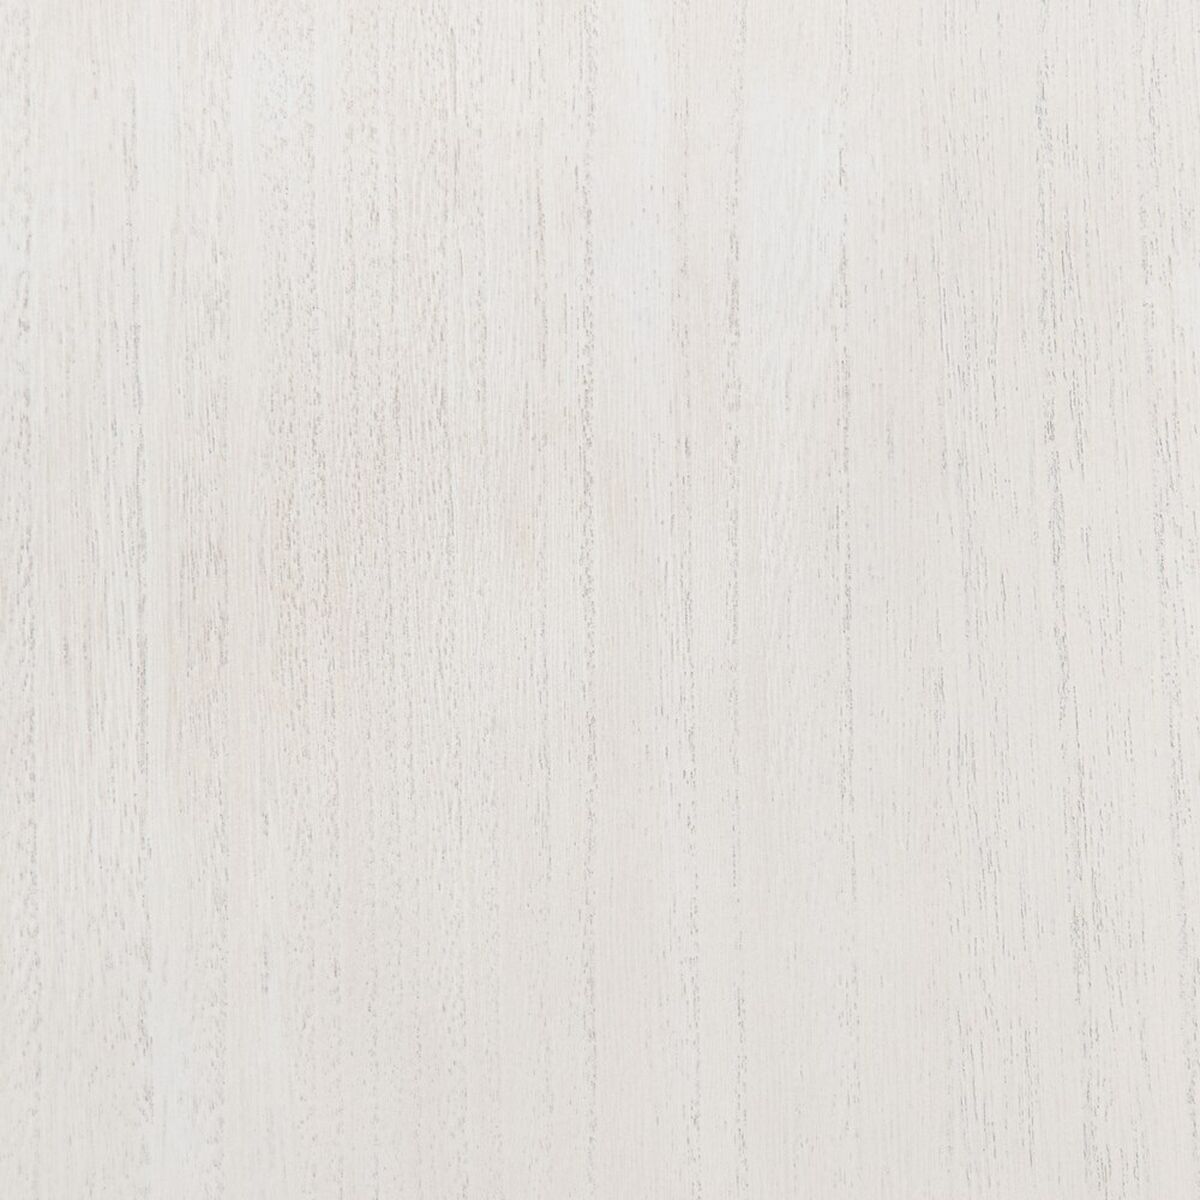 Vestibila galds ar atvilktnēm DUNE Dabisks Balts Egles koksne 80 x 40 x 80 cm